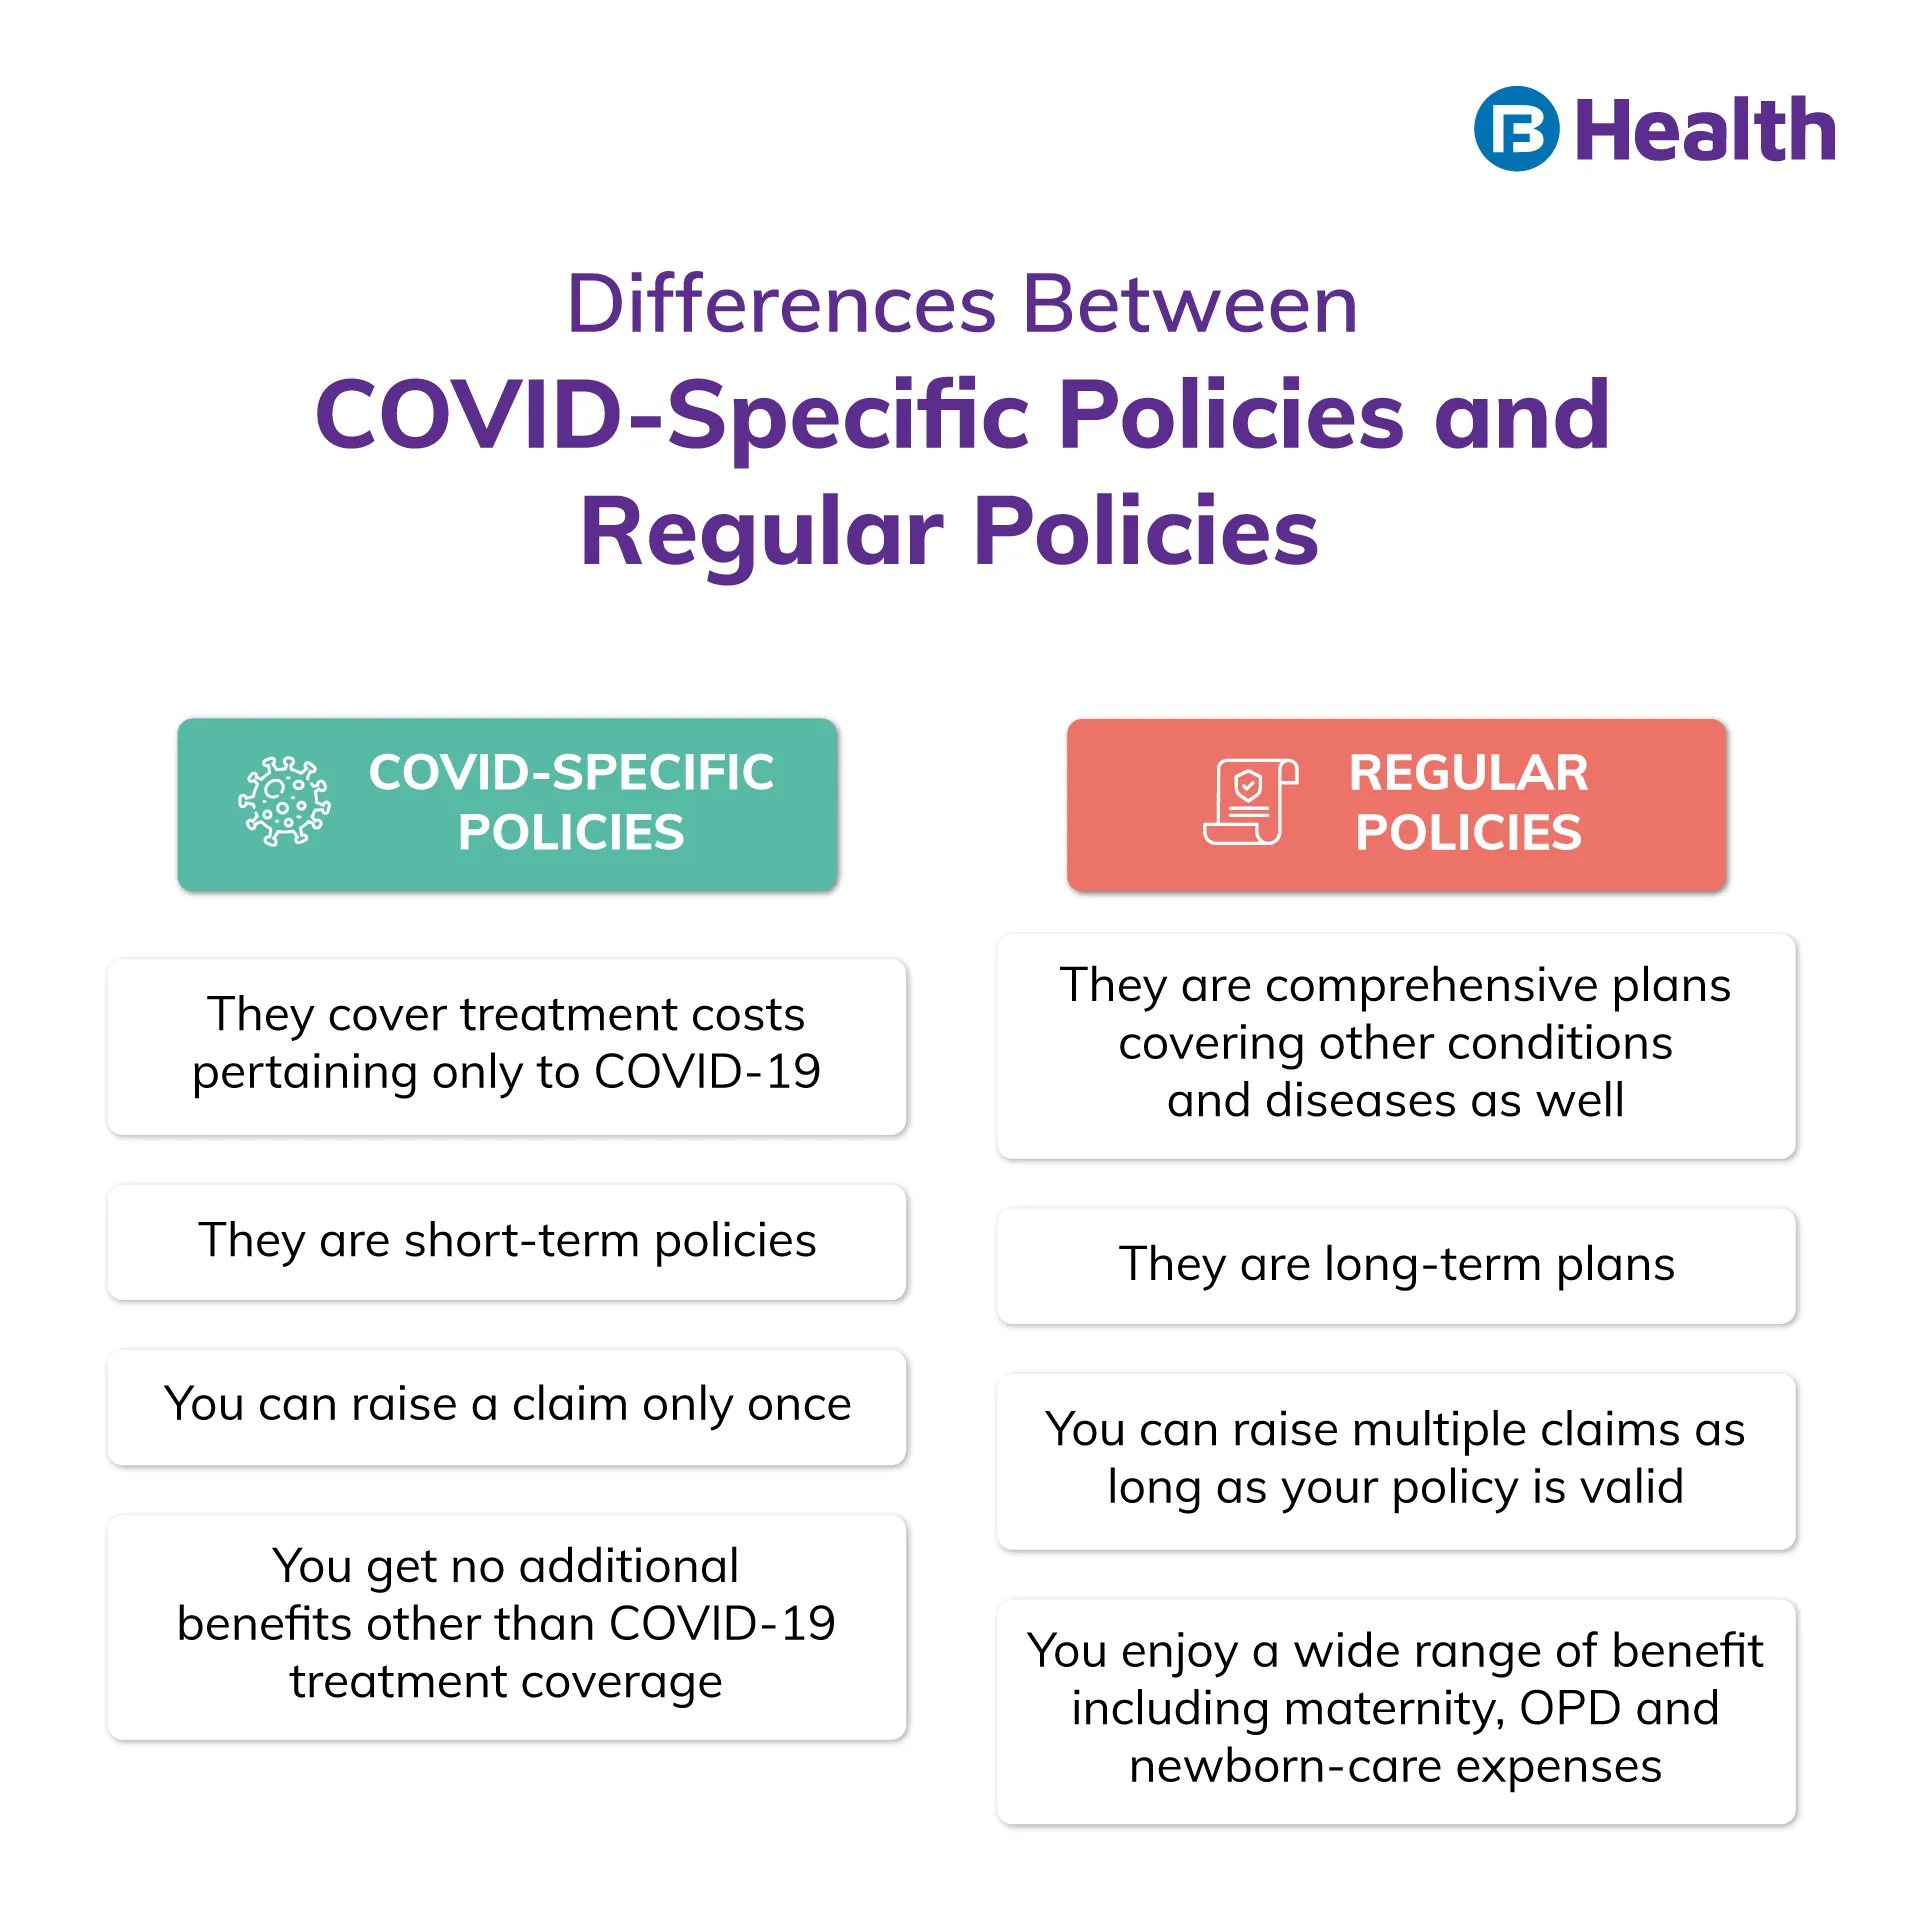 COVID-19 Health insurance policies